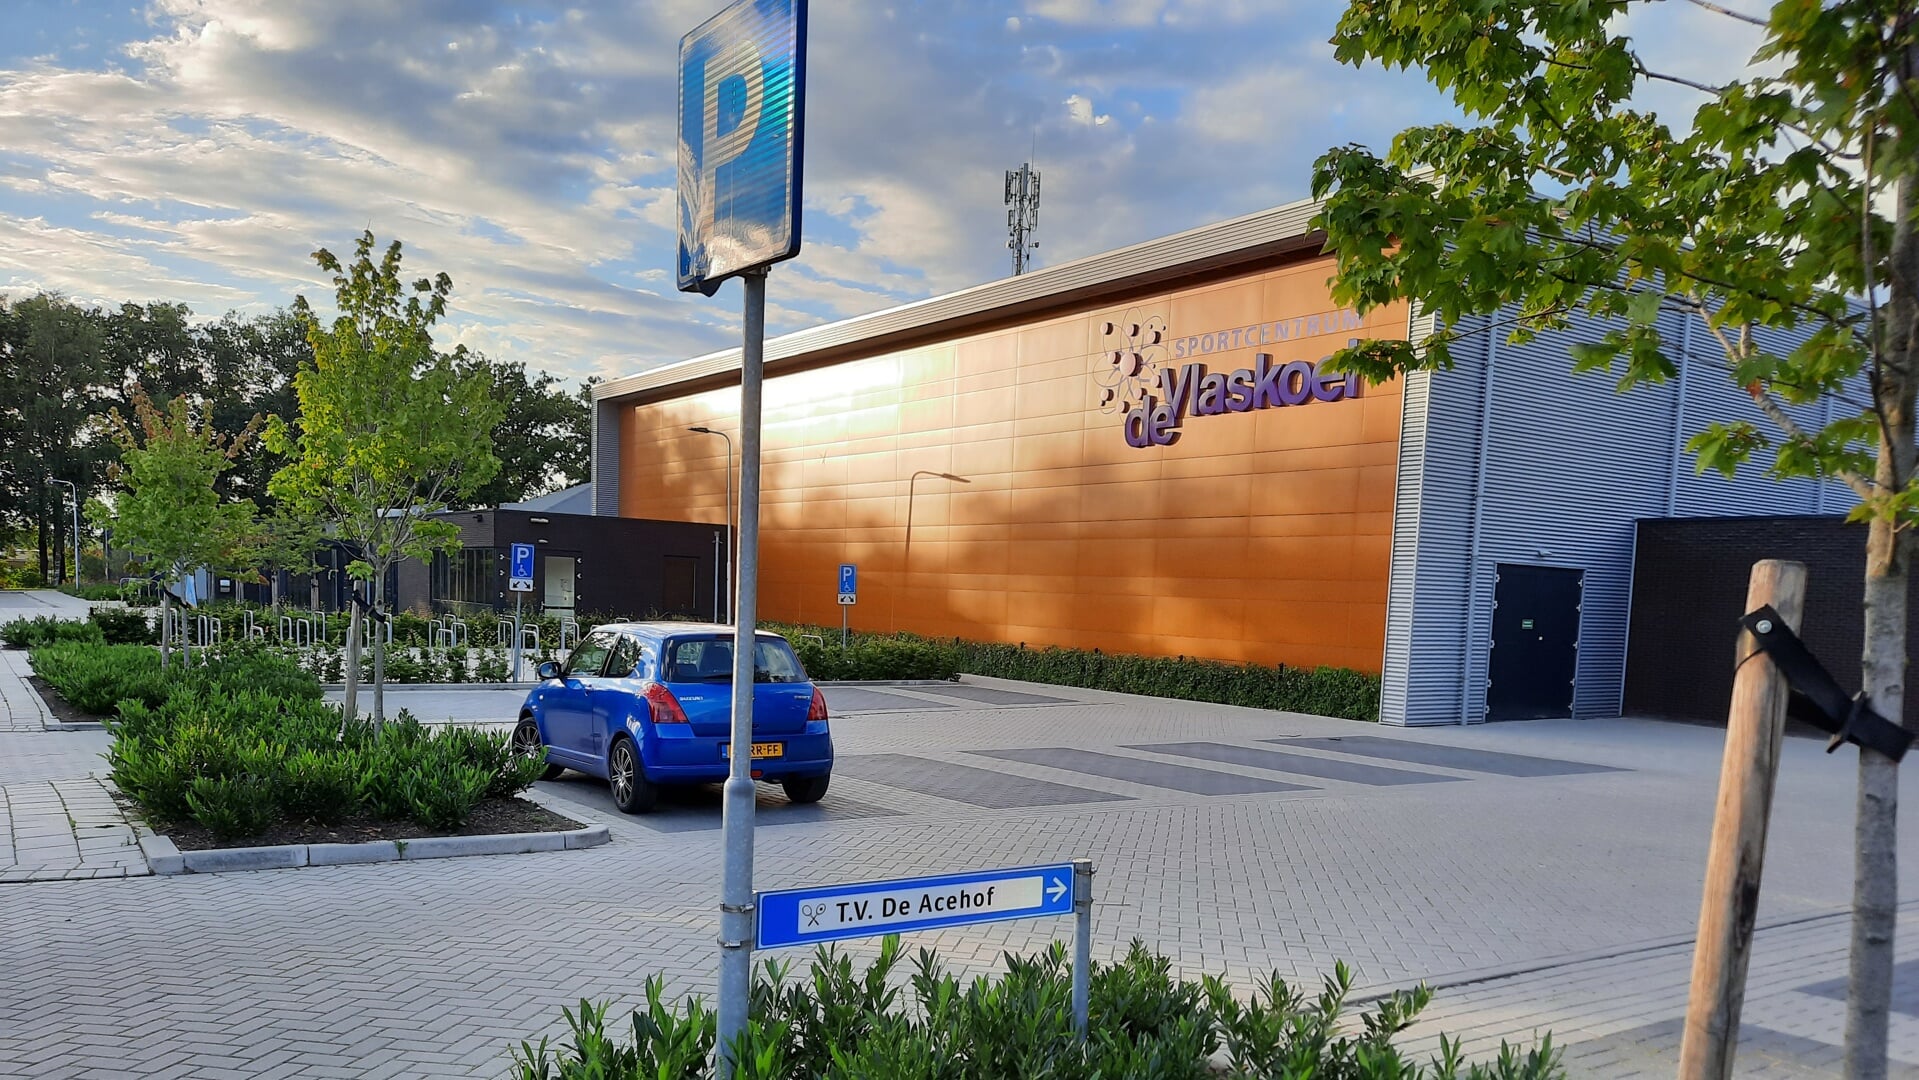 Sportcentrum de Vlaskoel in Tubbergen